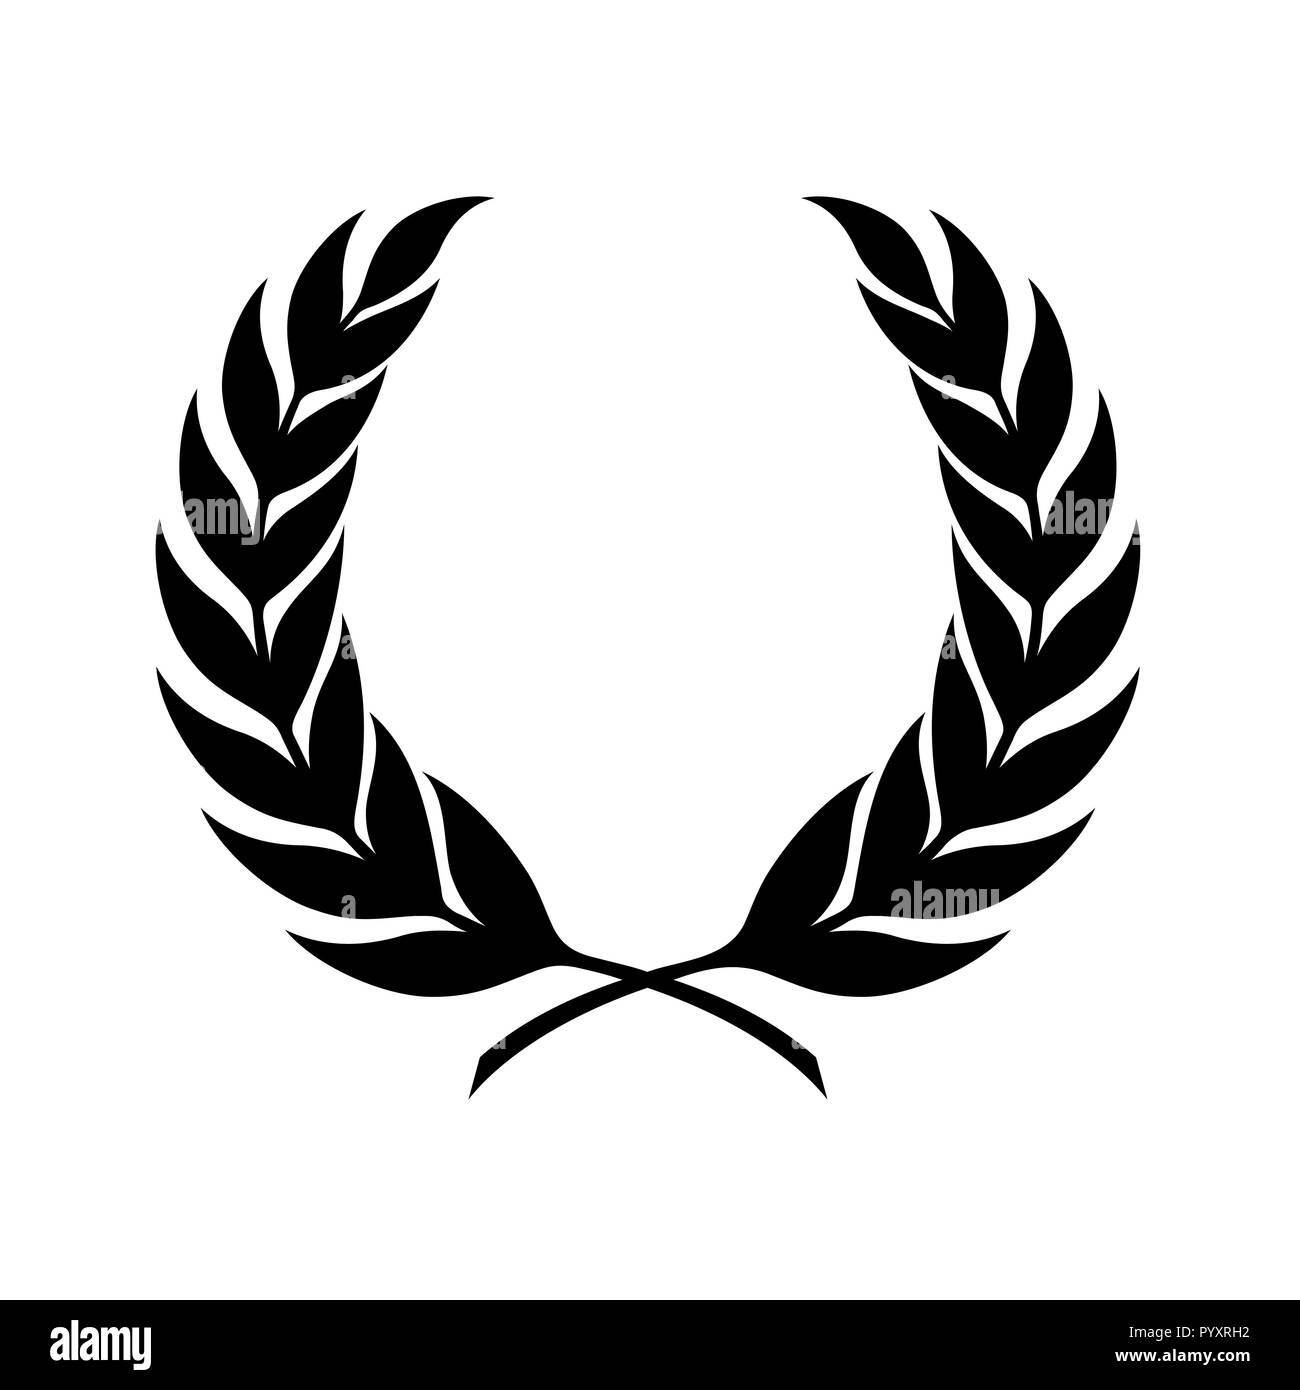 Laurel symbol illustration with a white background Stock Photo